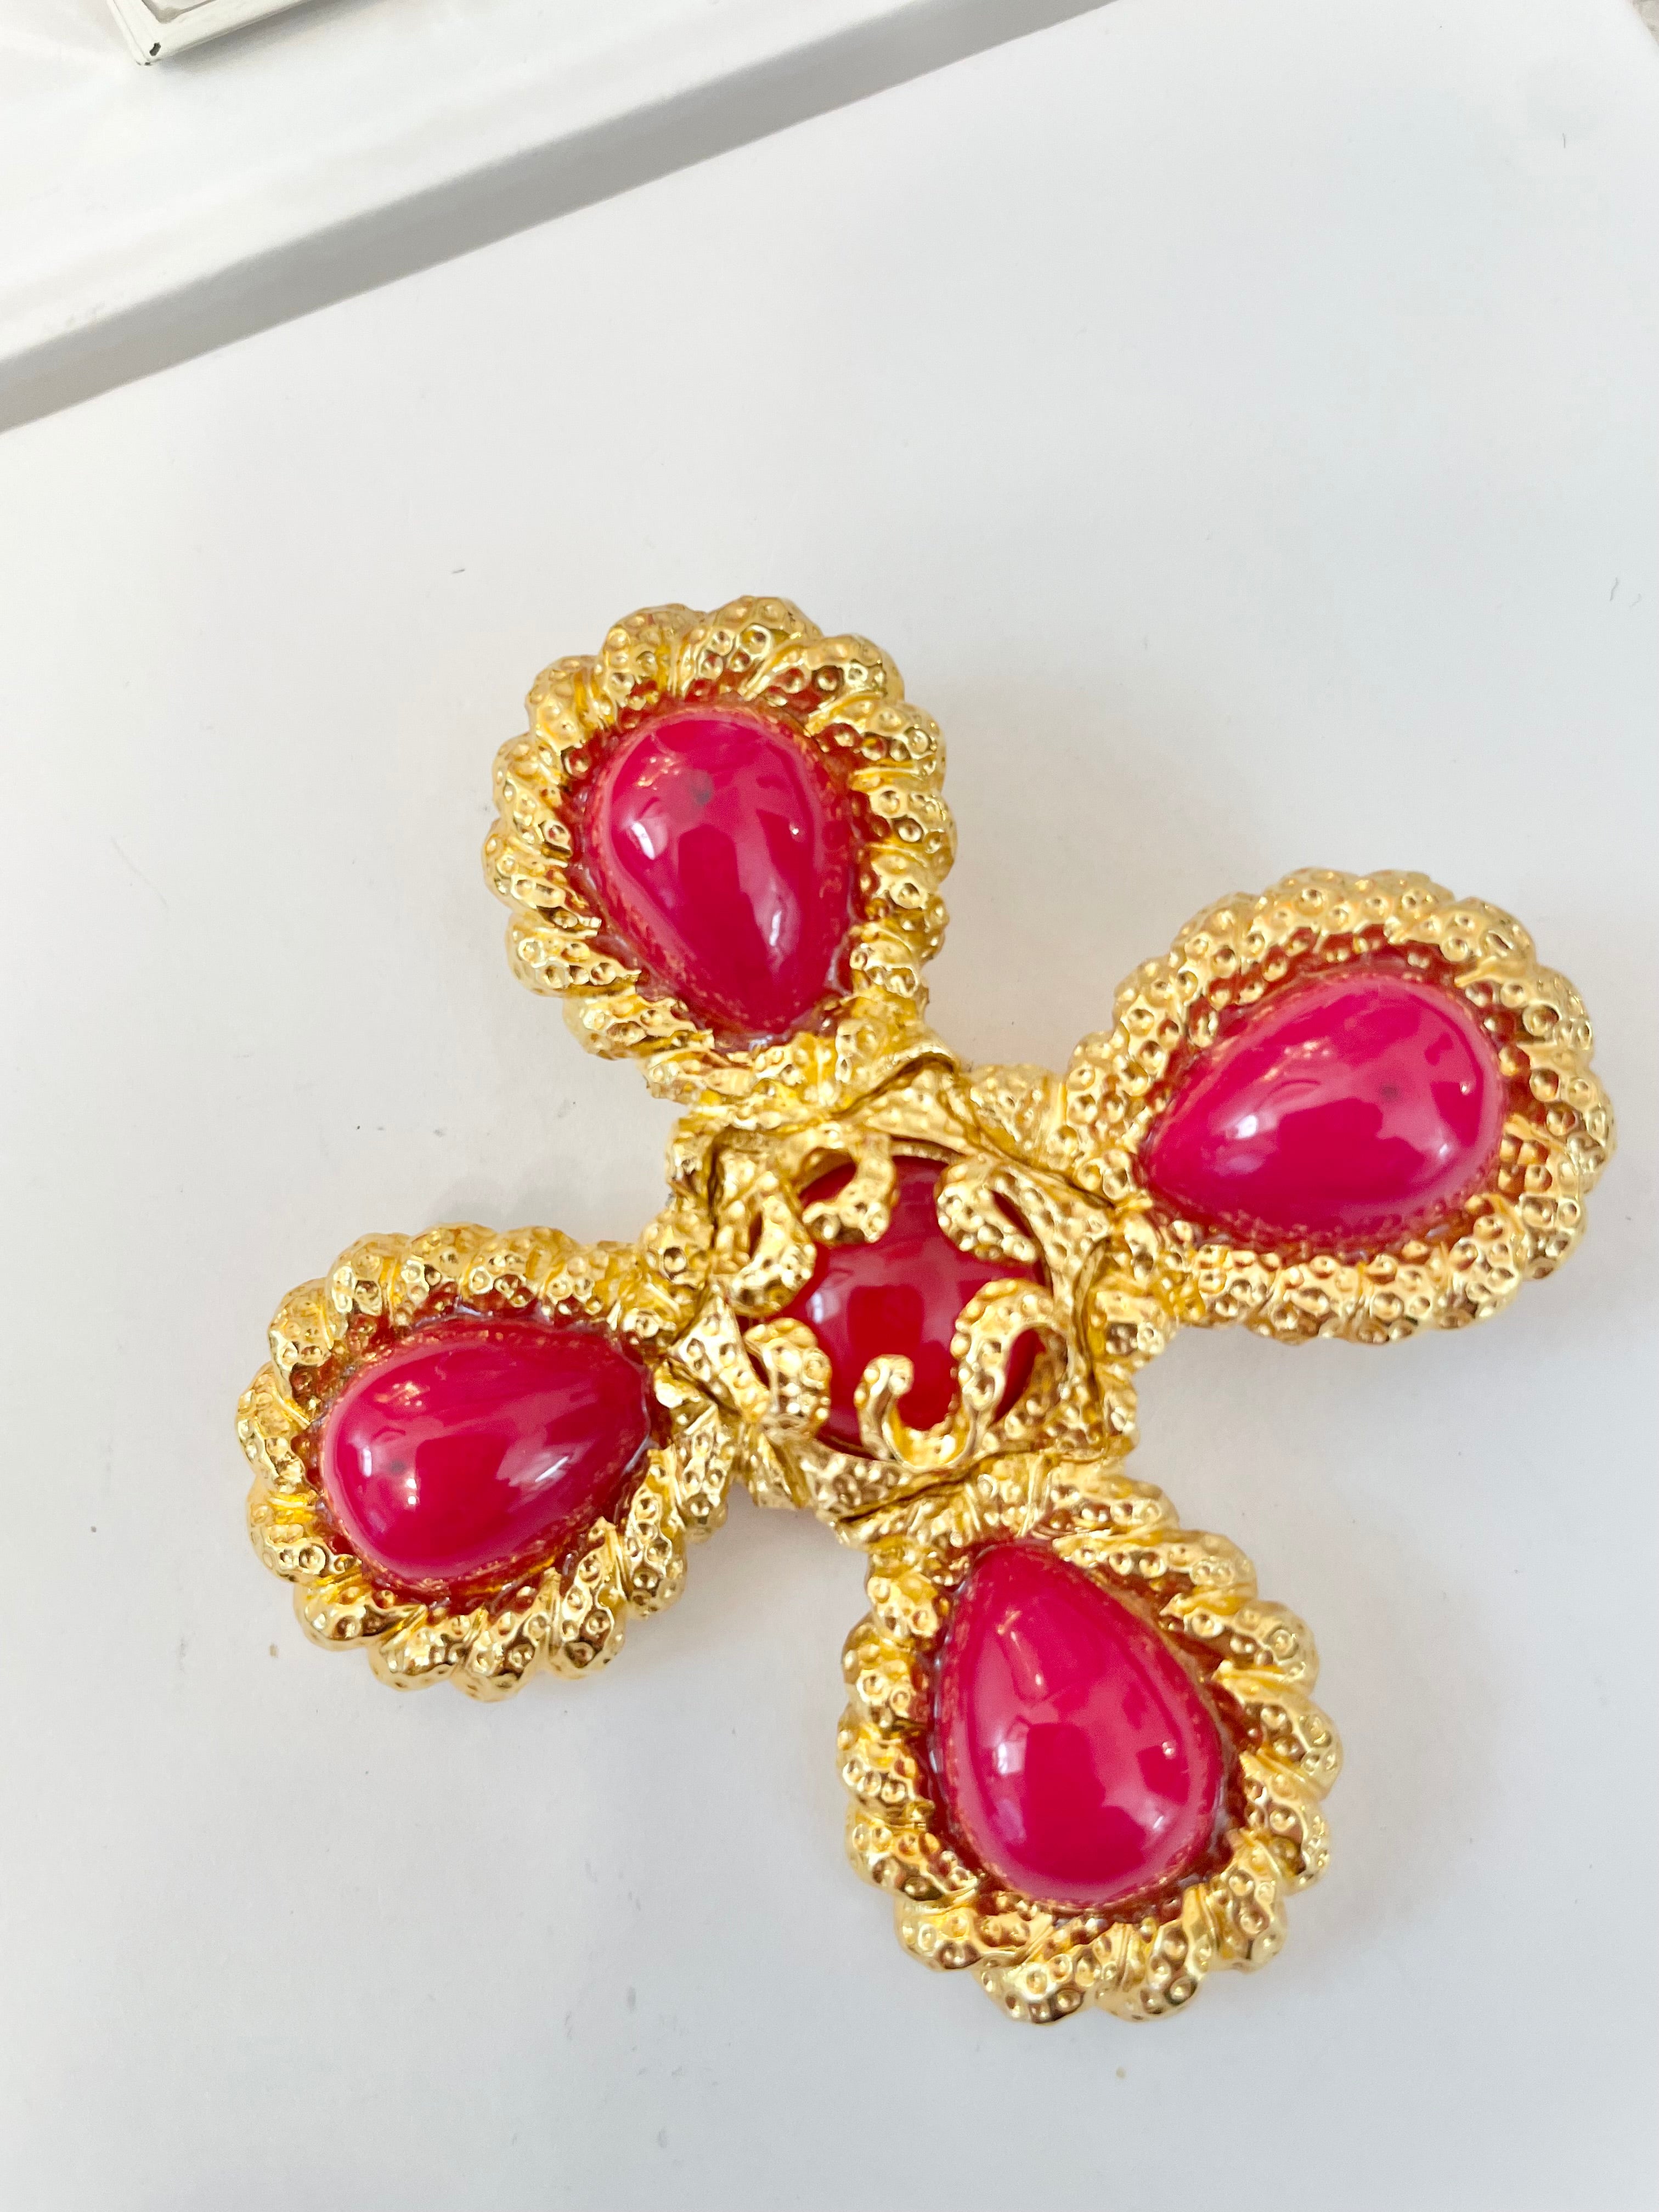 A truly classy St. John hot pink Maltese cross brooch.... so chic